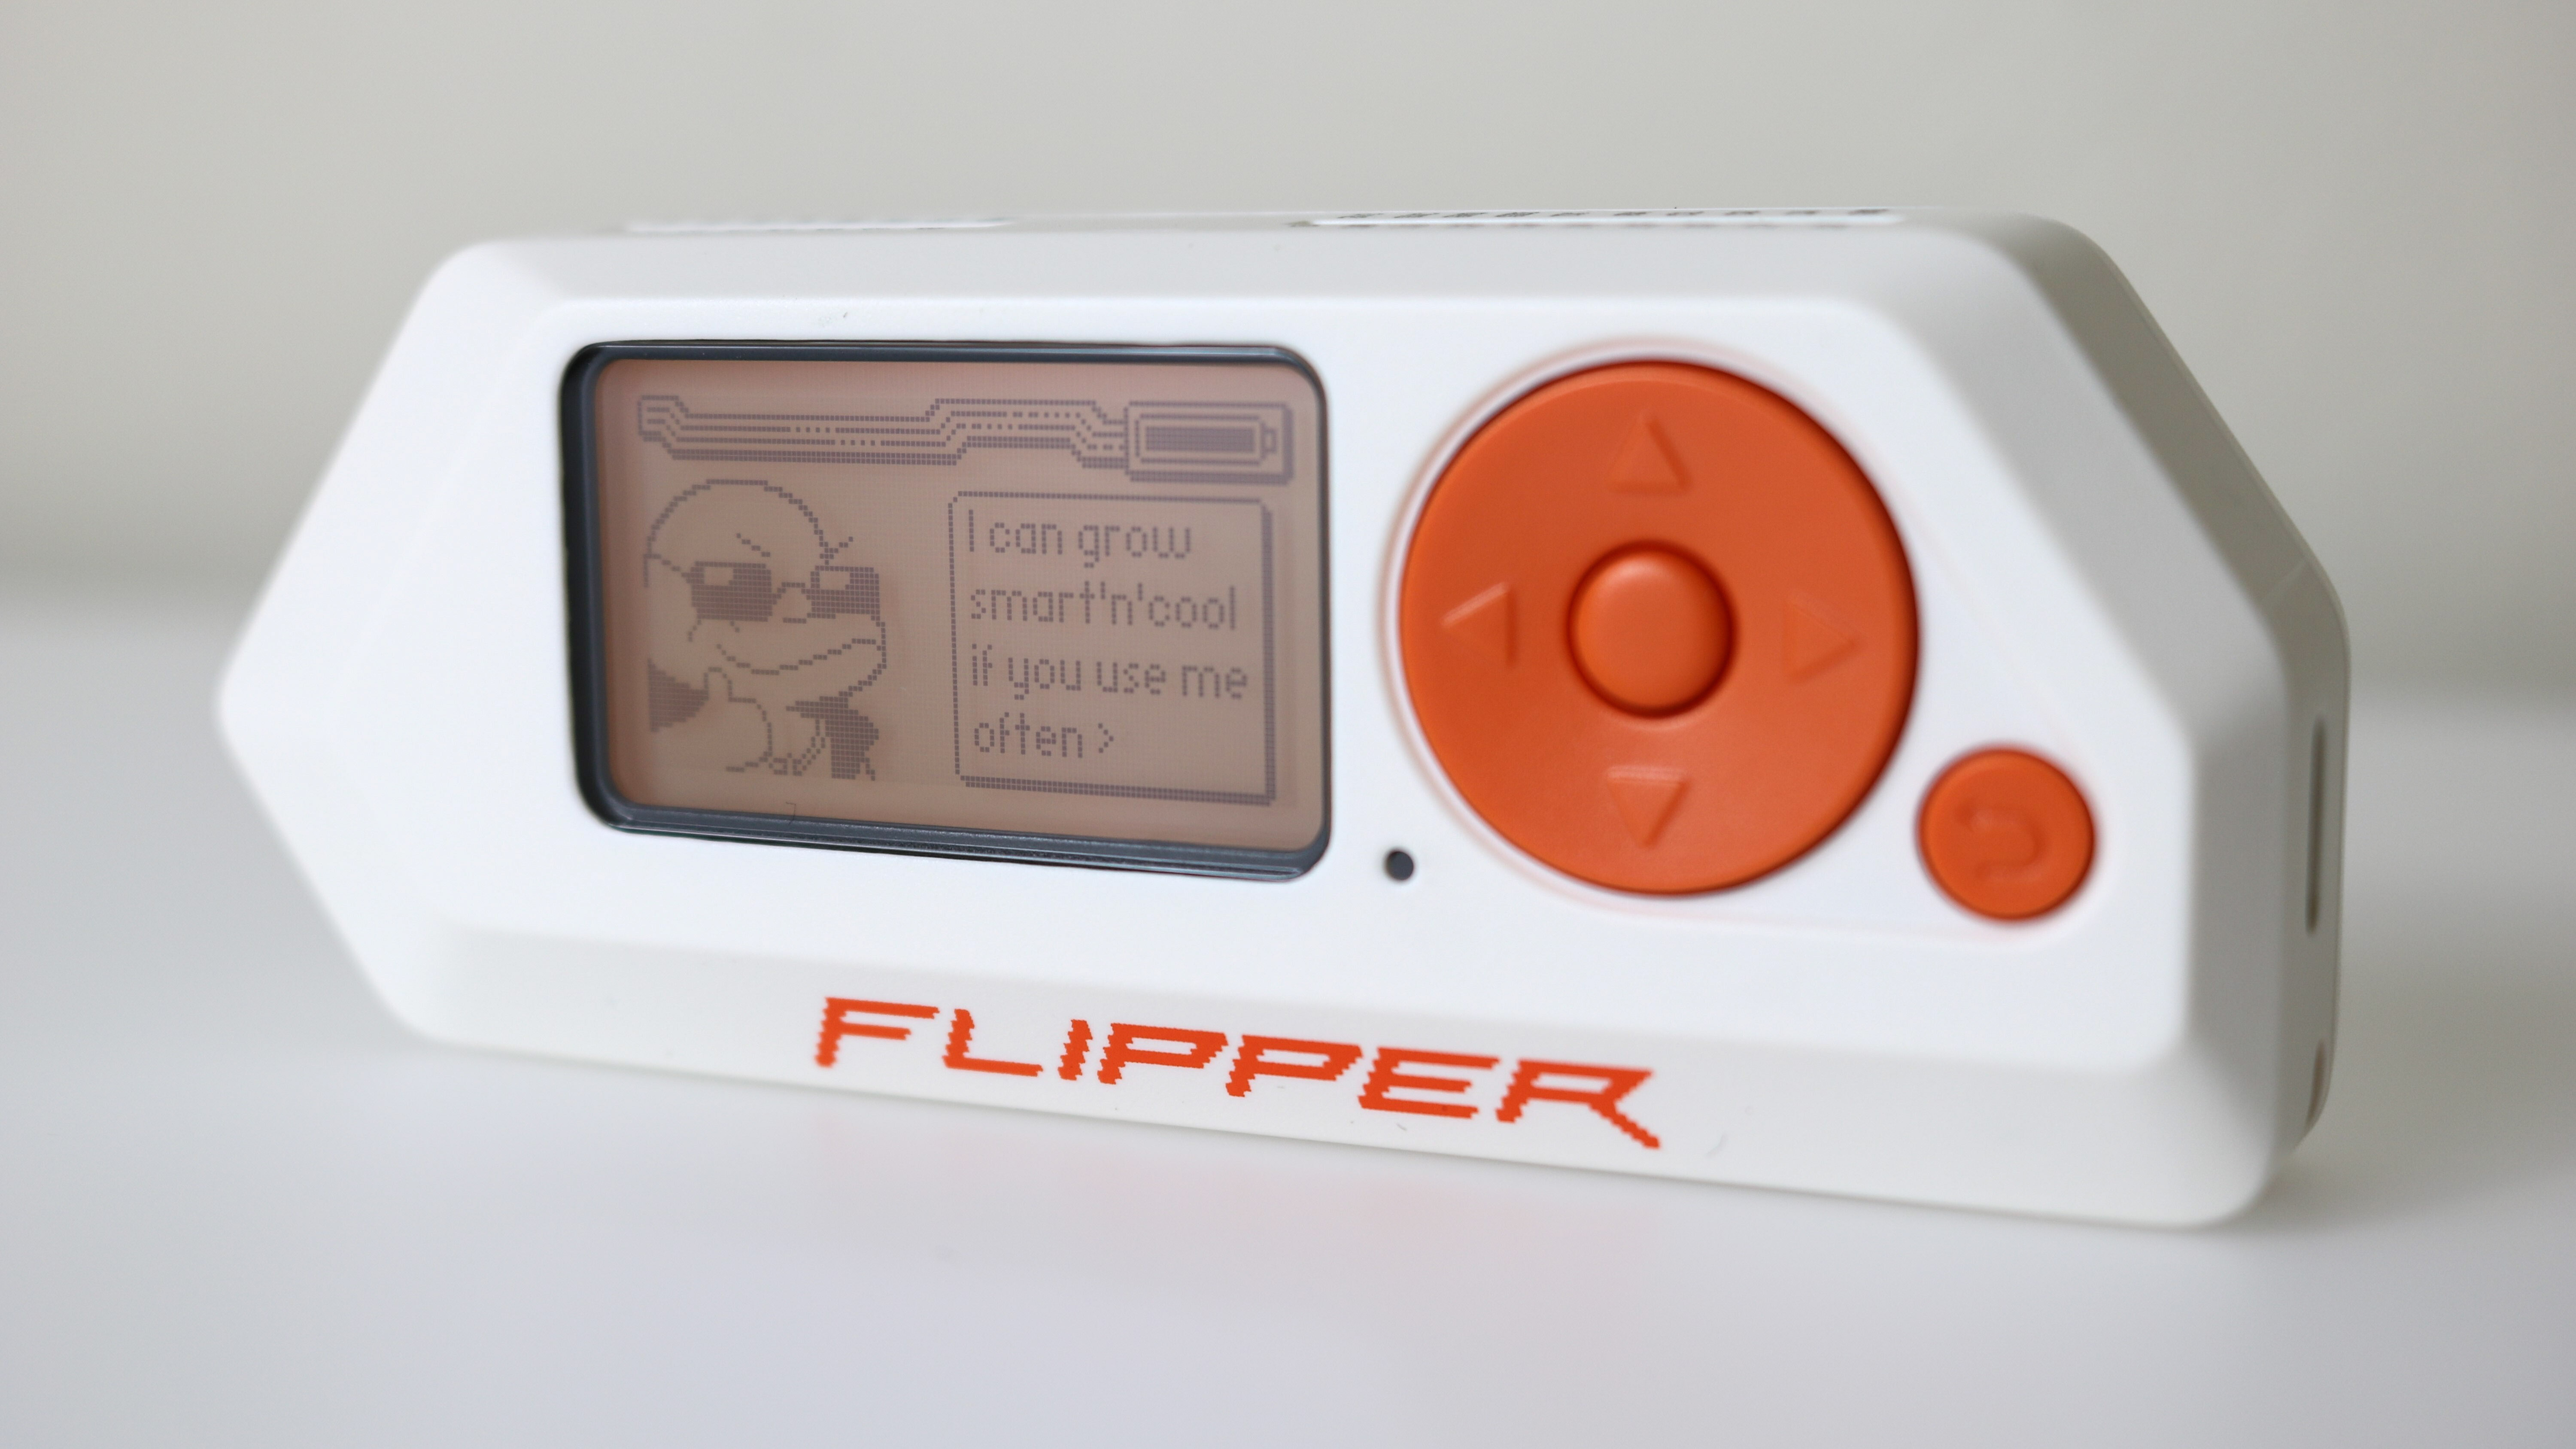 What Is Flipper Zero? The Hacker Tool Going Viral on TikTok